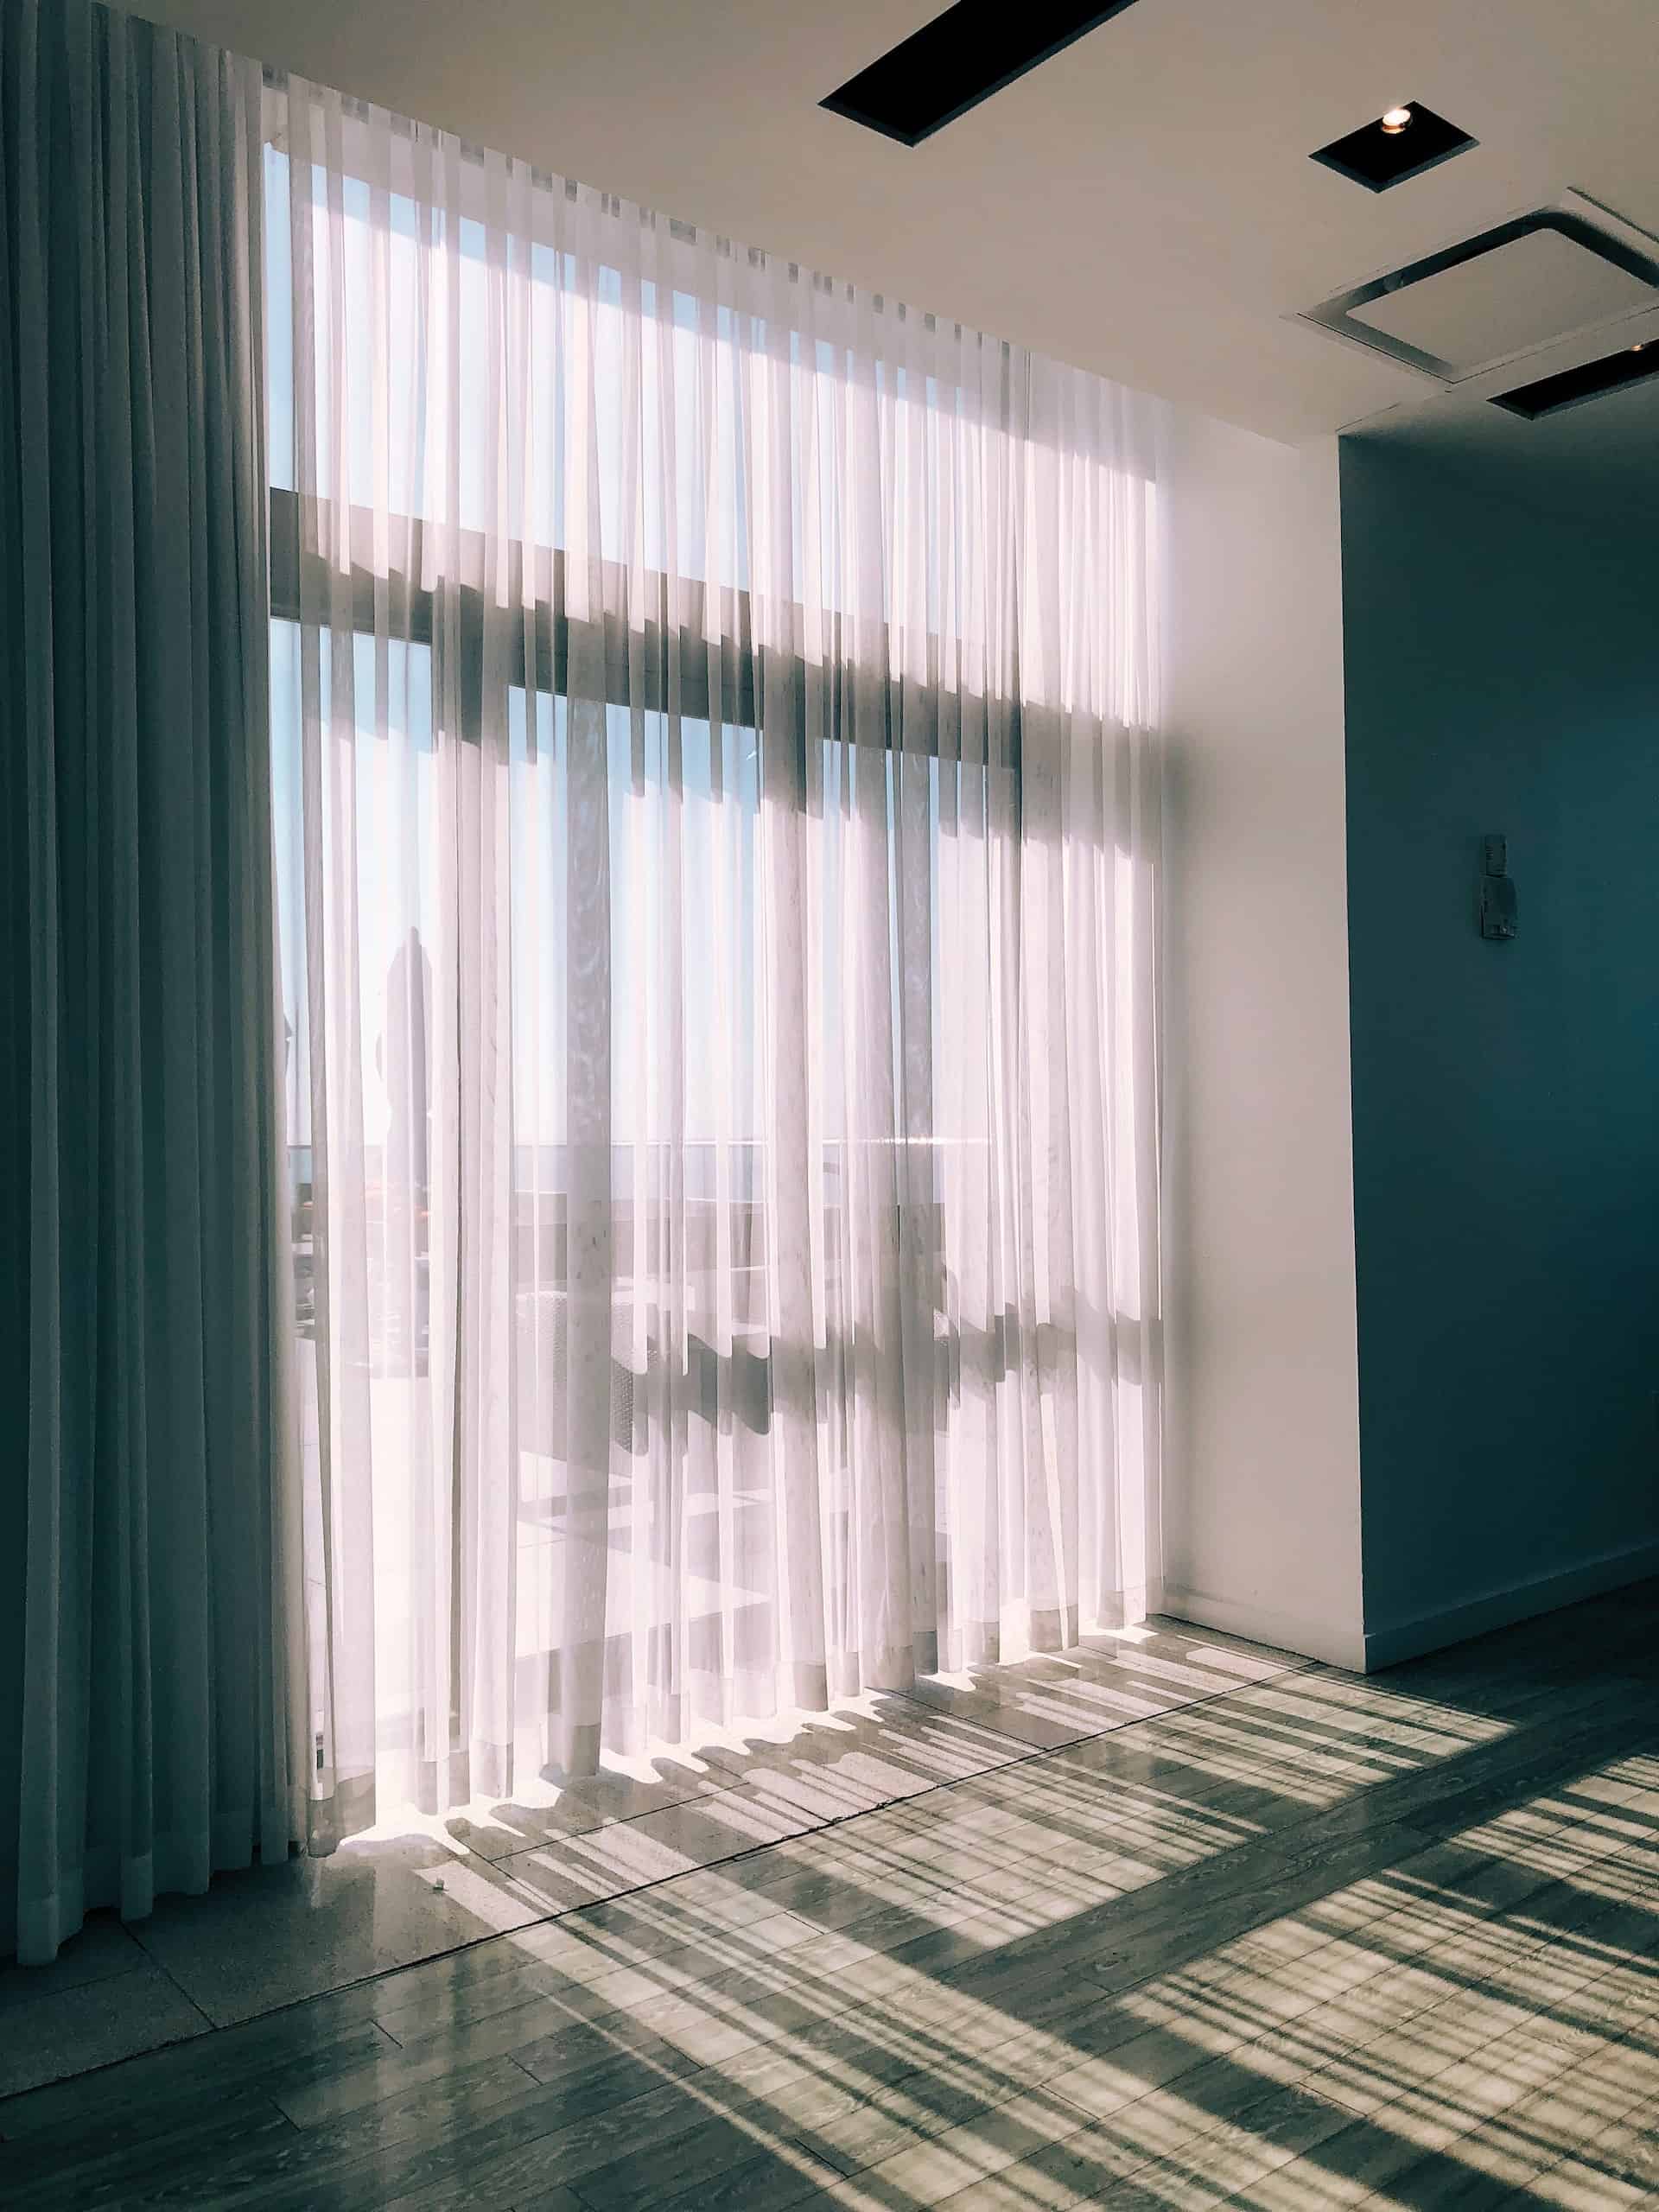 Will curtains work in a modern interior?